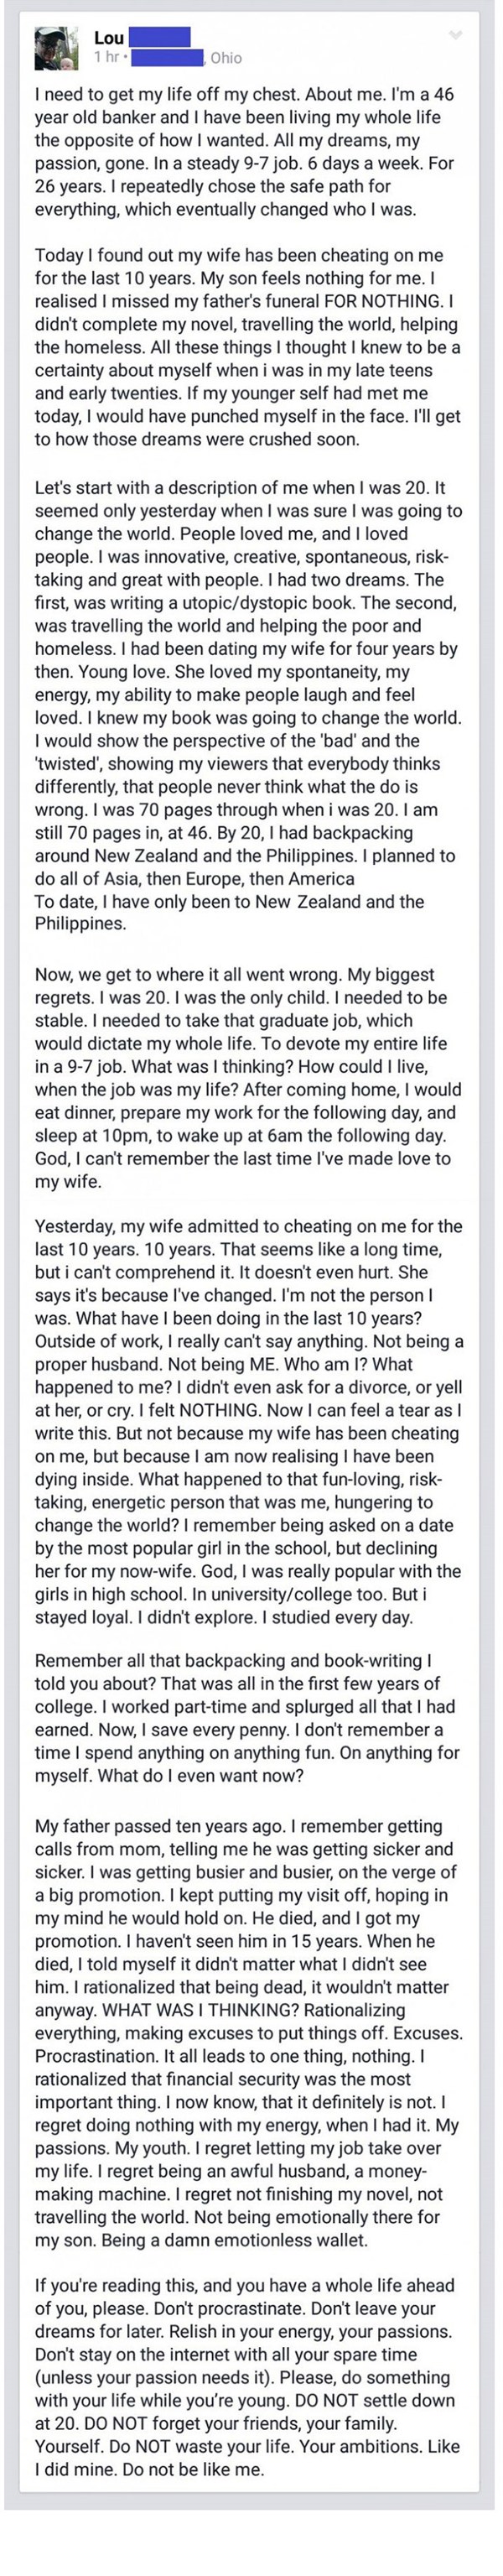 A heartbreaking facebook post